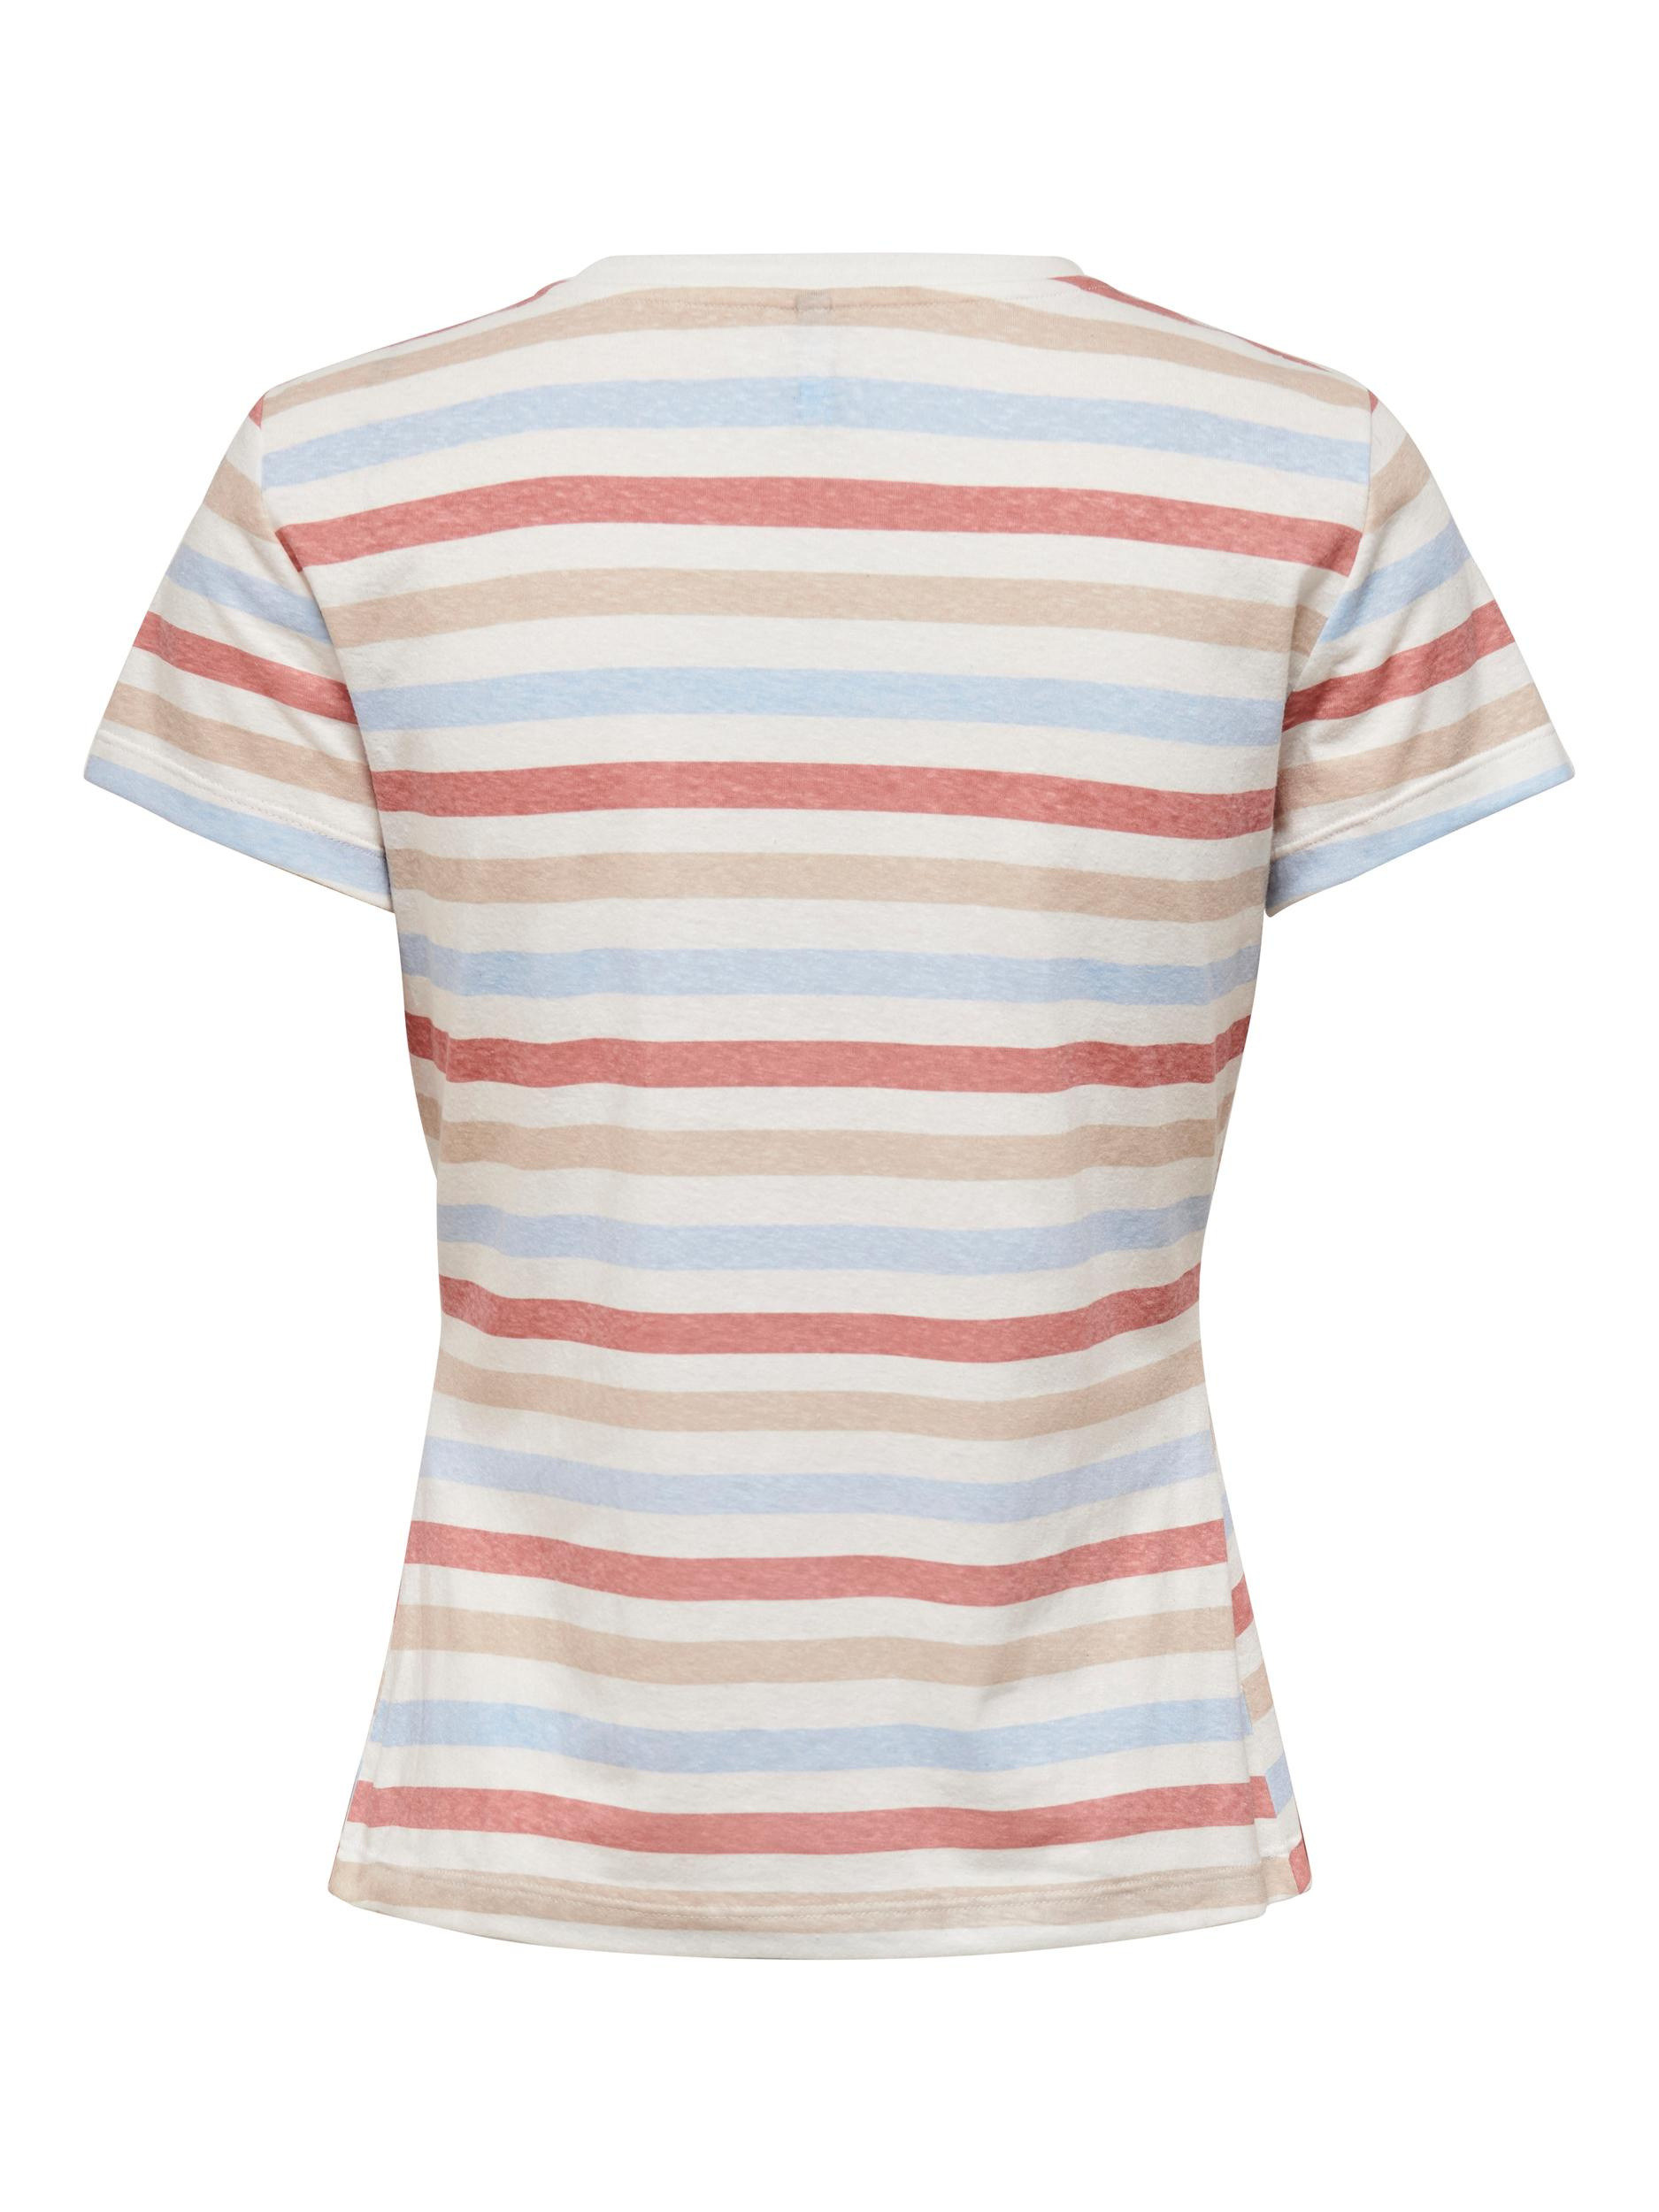 Striped T-shirt, Multicolor, large image number 1